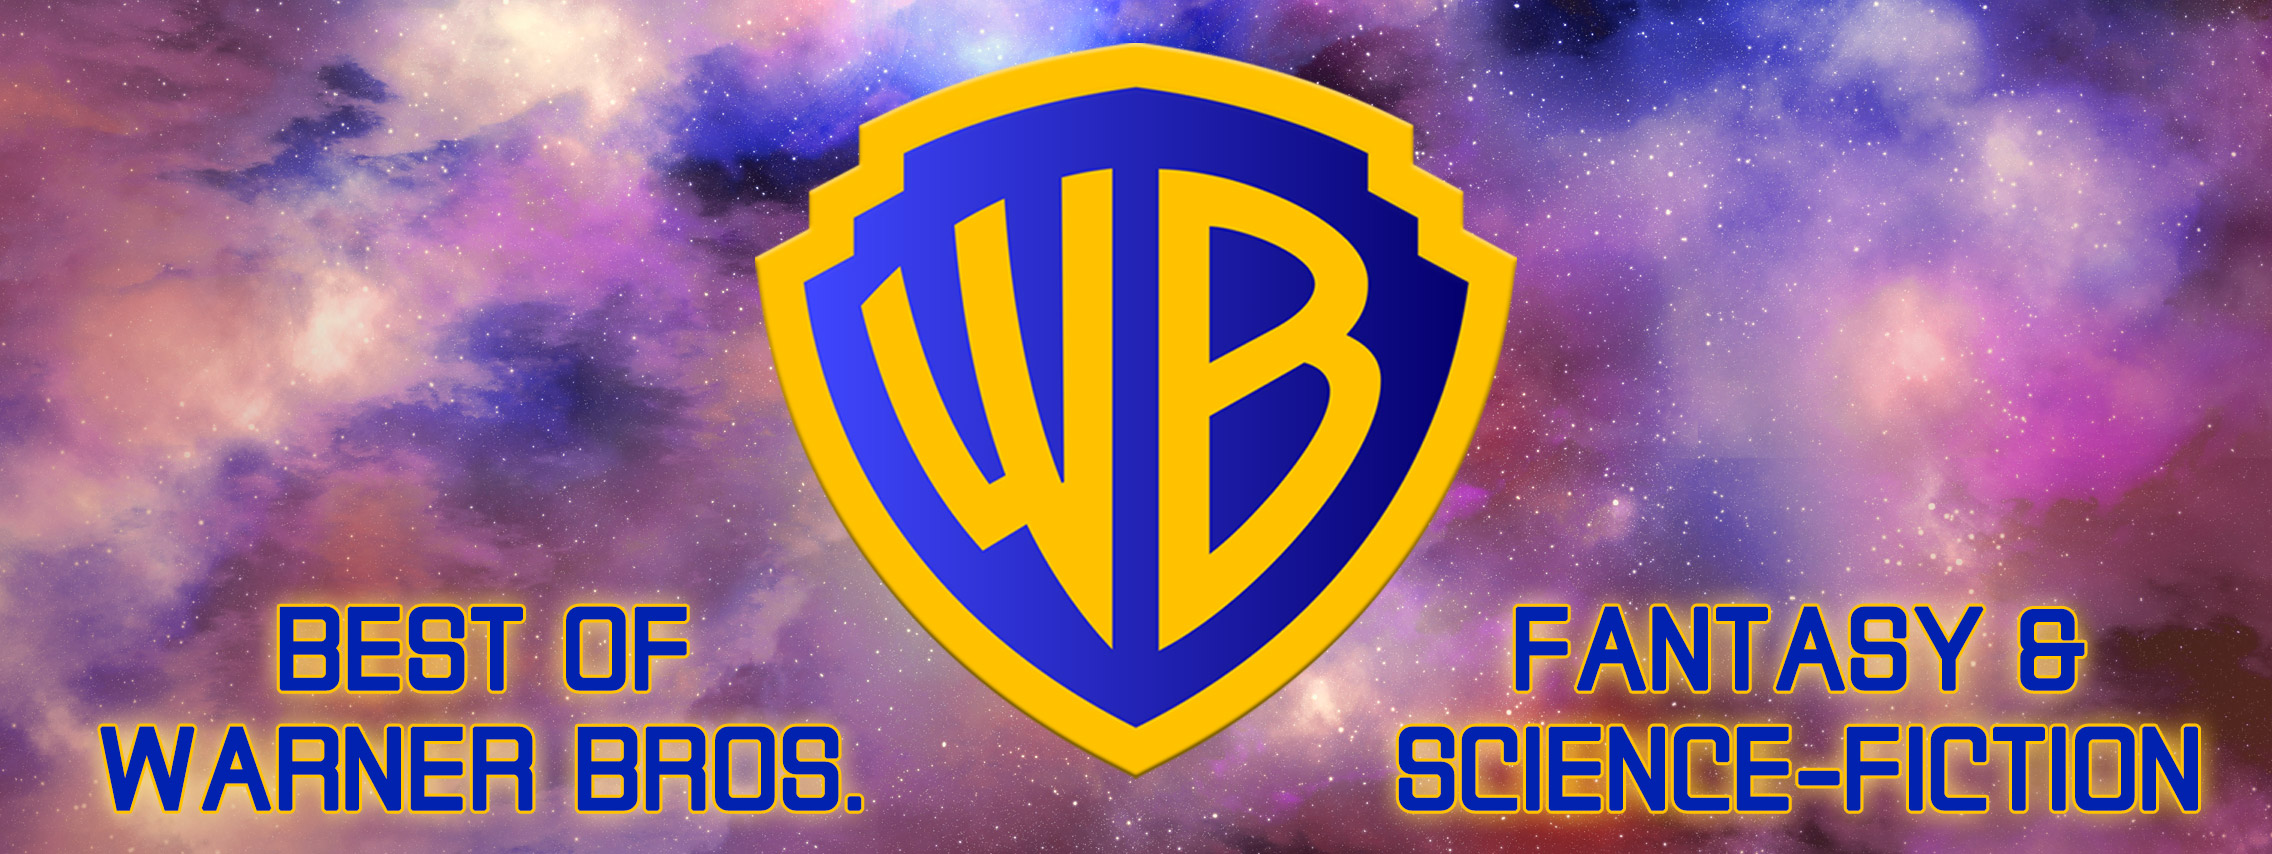 Best of Warner - Fantasy & Science-Fiction